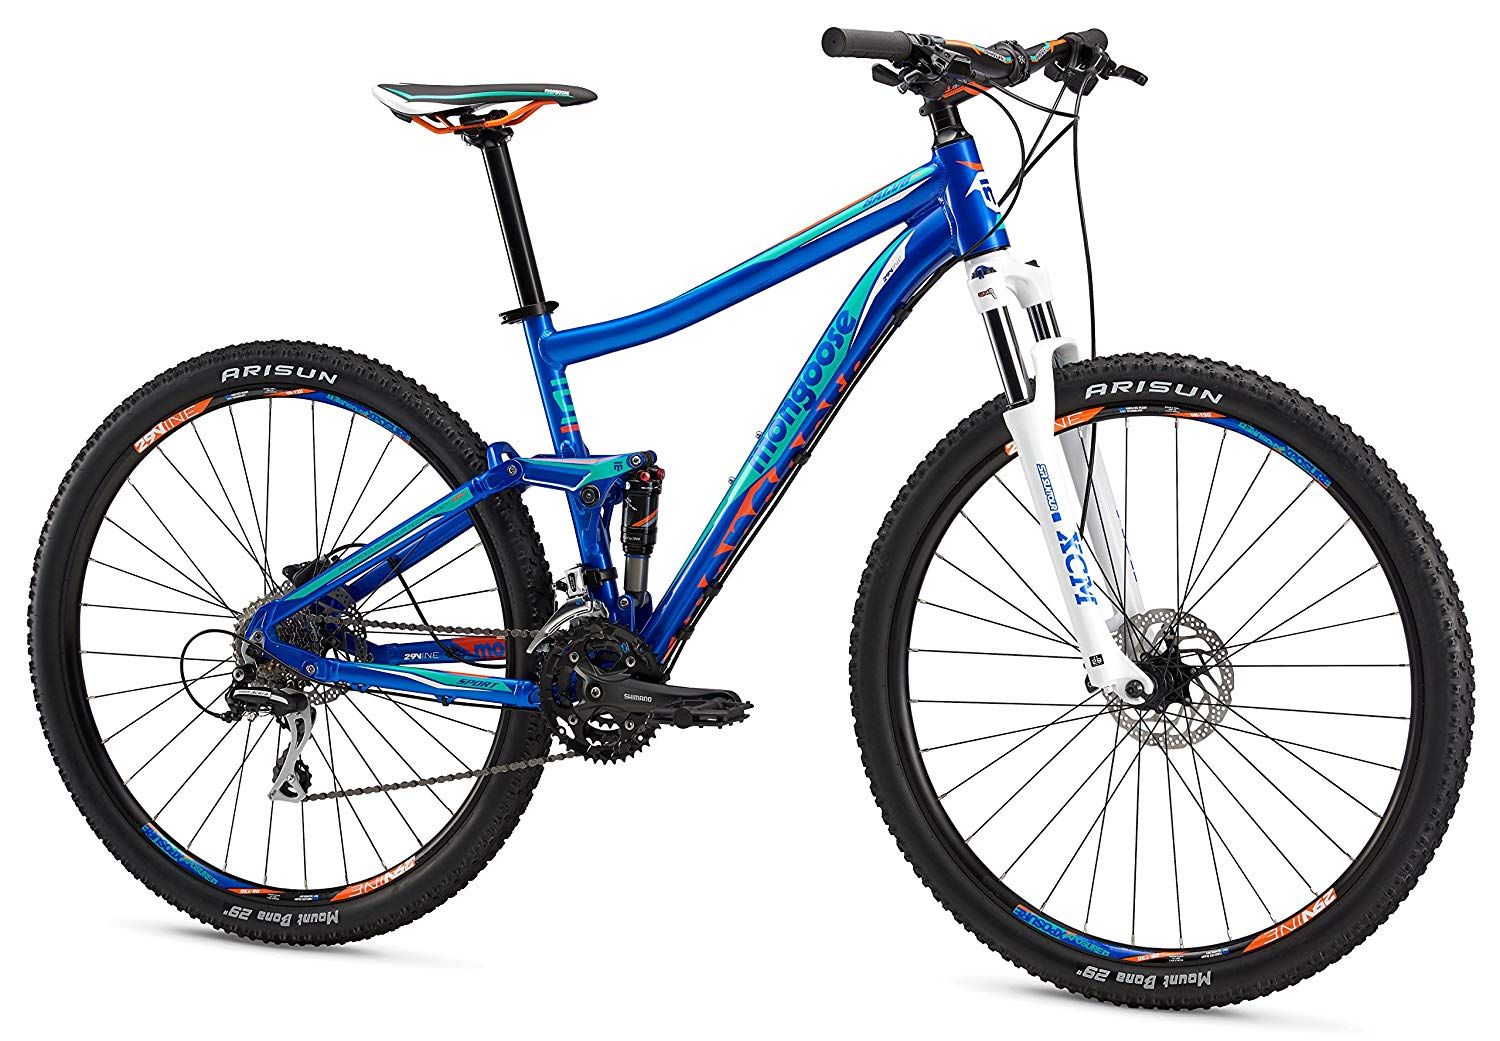 Mongoose Salvo 29 Sport - A Good, Cheap, Mountain Bike